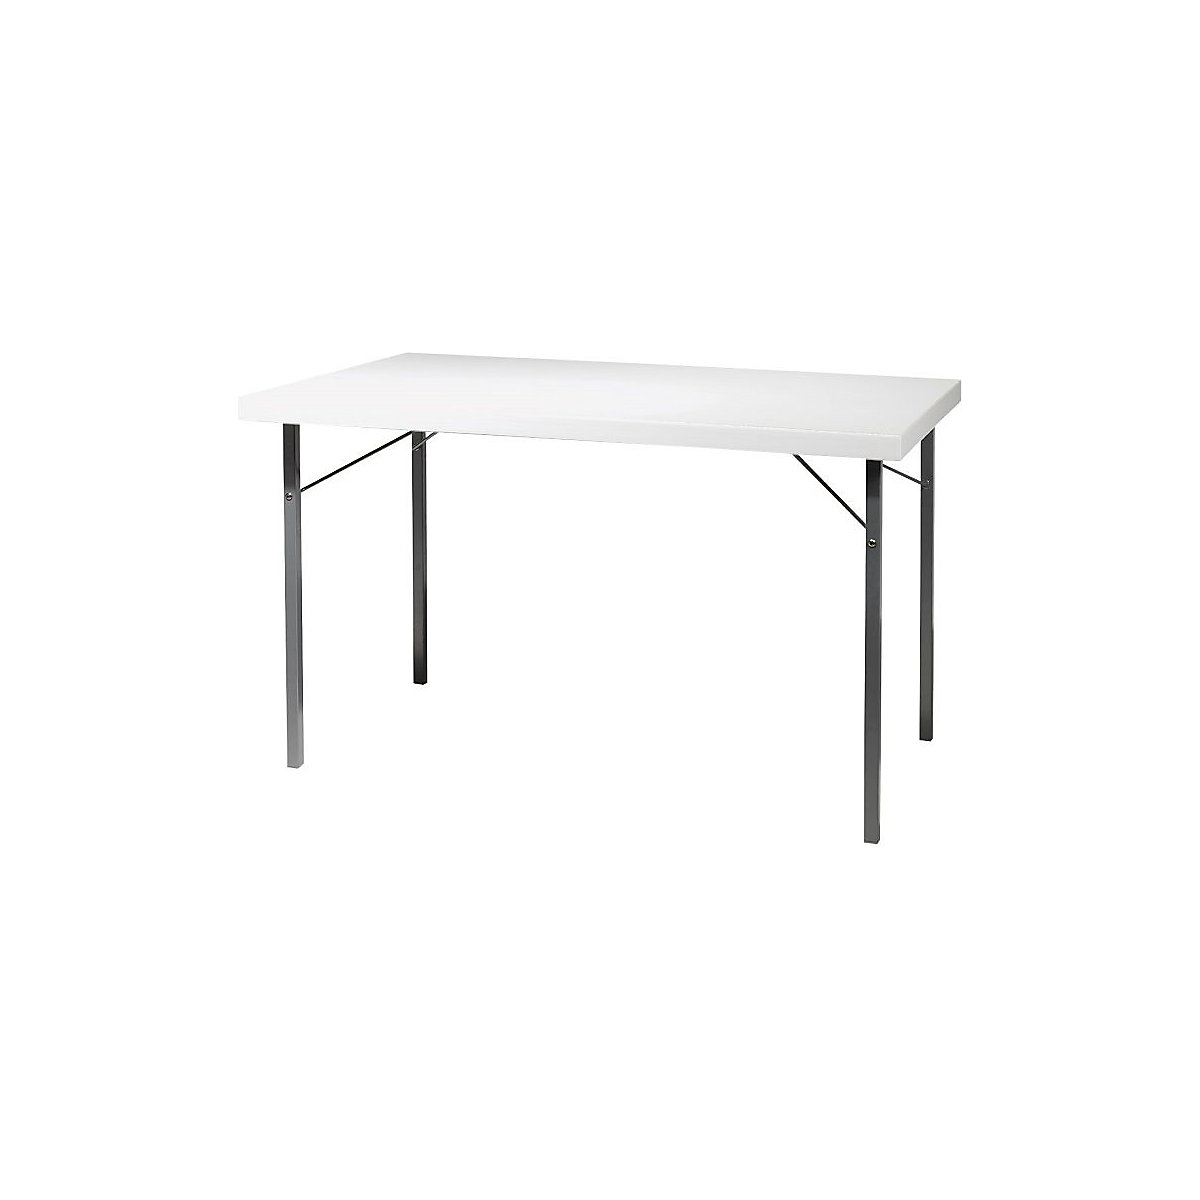 Inklapbare tafel, frame van metaal, aluminiumzilver, b x d = 1200 x 800 mm, wit laminaatblad-2